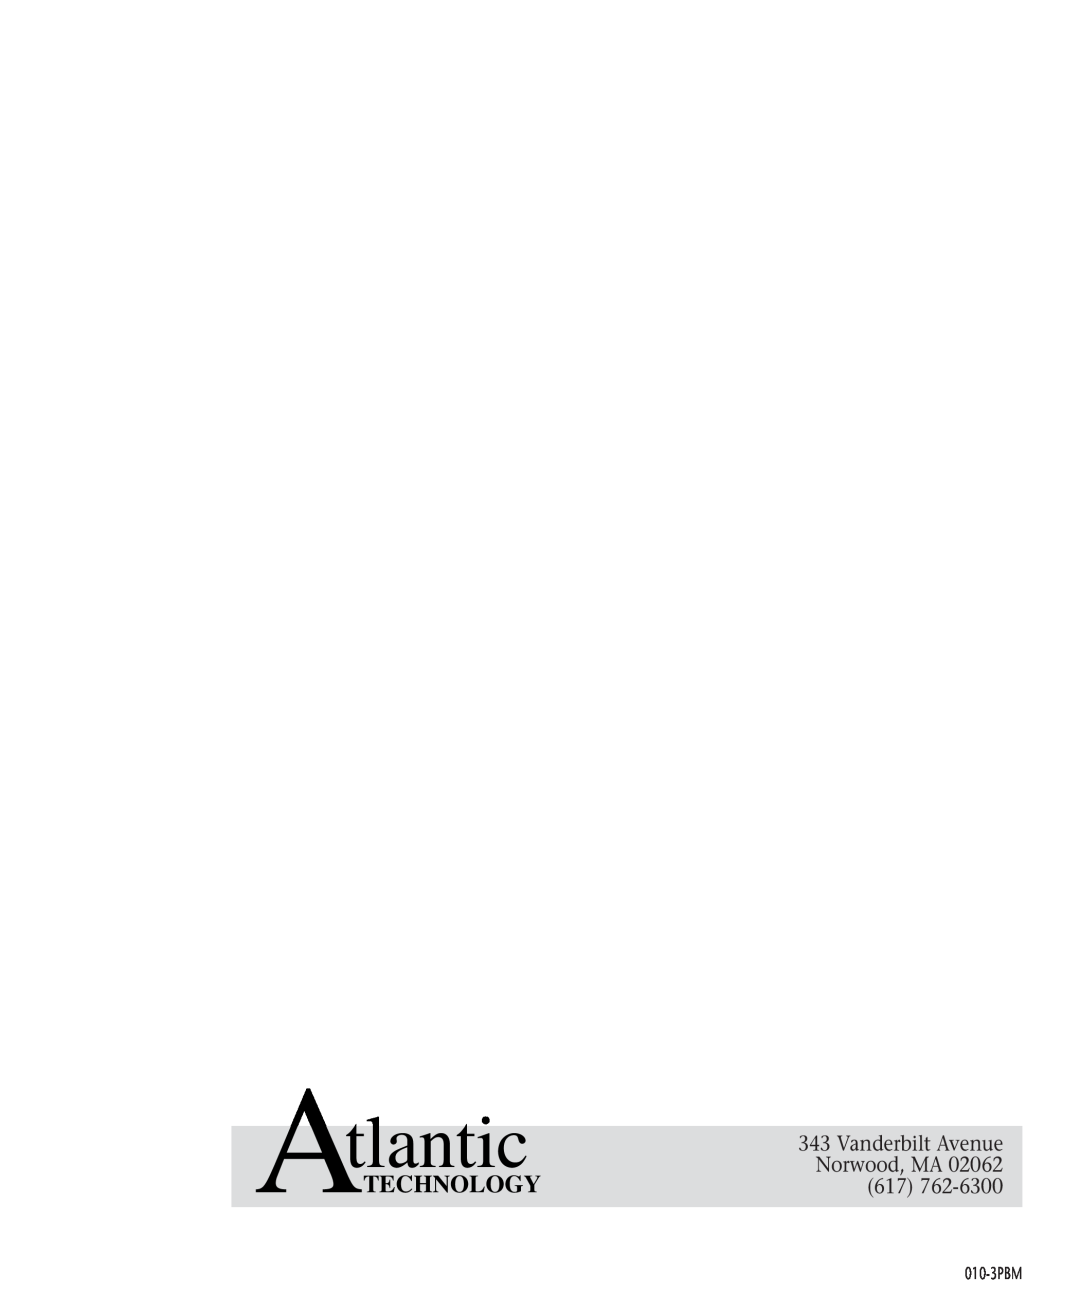 Atlantic Technology 162 PBM instruction manual tlantic, Atechnology 